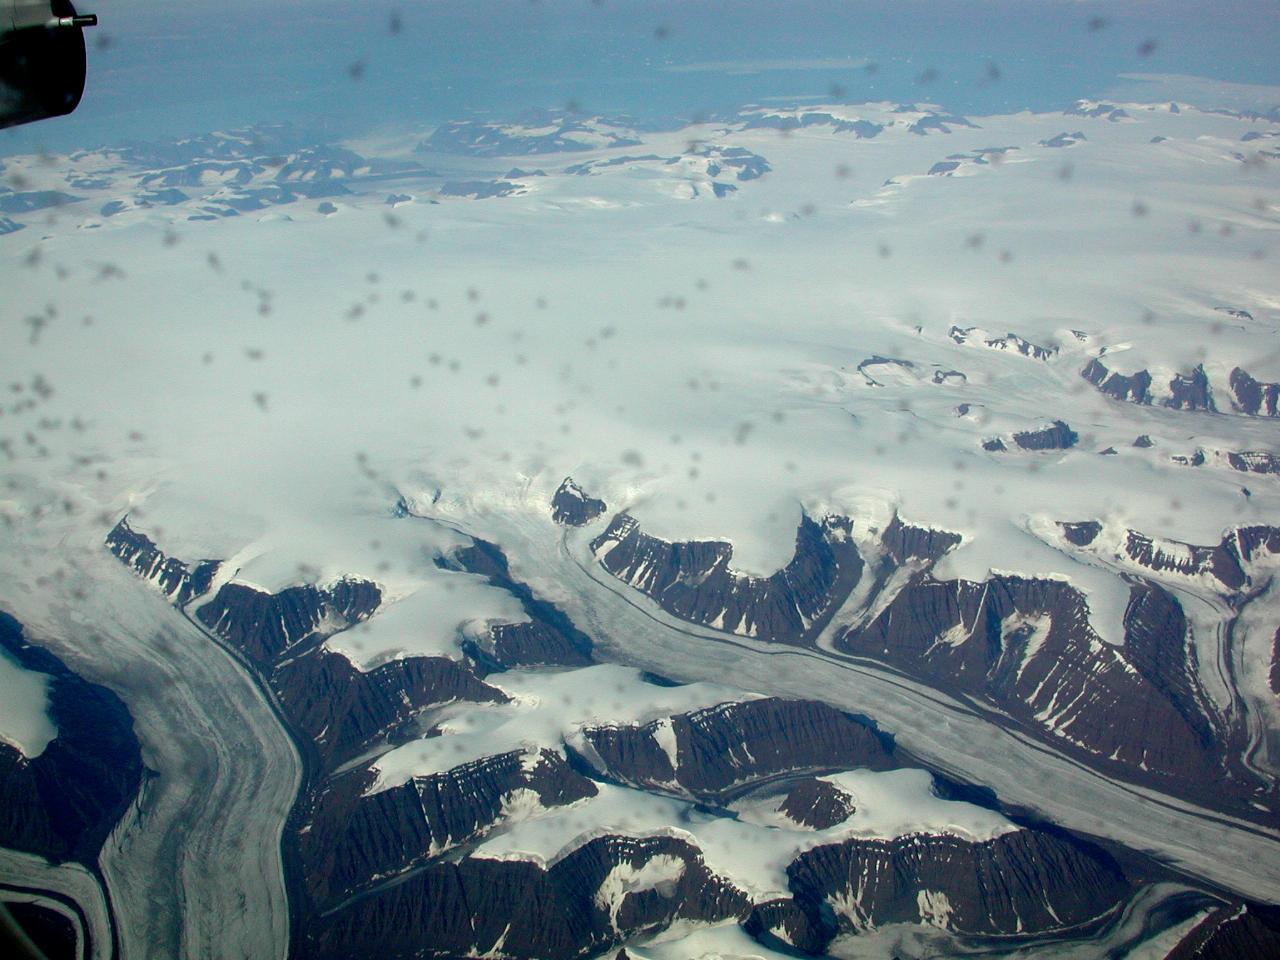 KPLU Viking Jazz: Greenland and several of its many glaciers